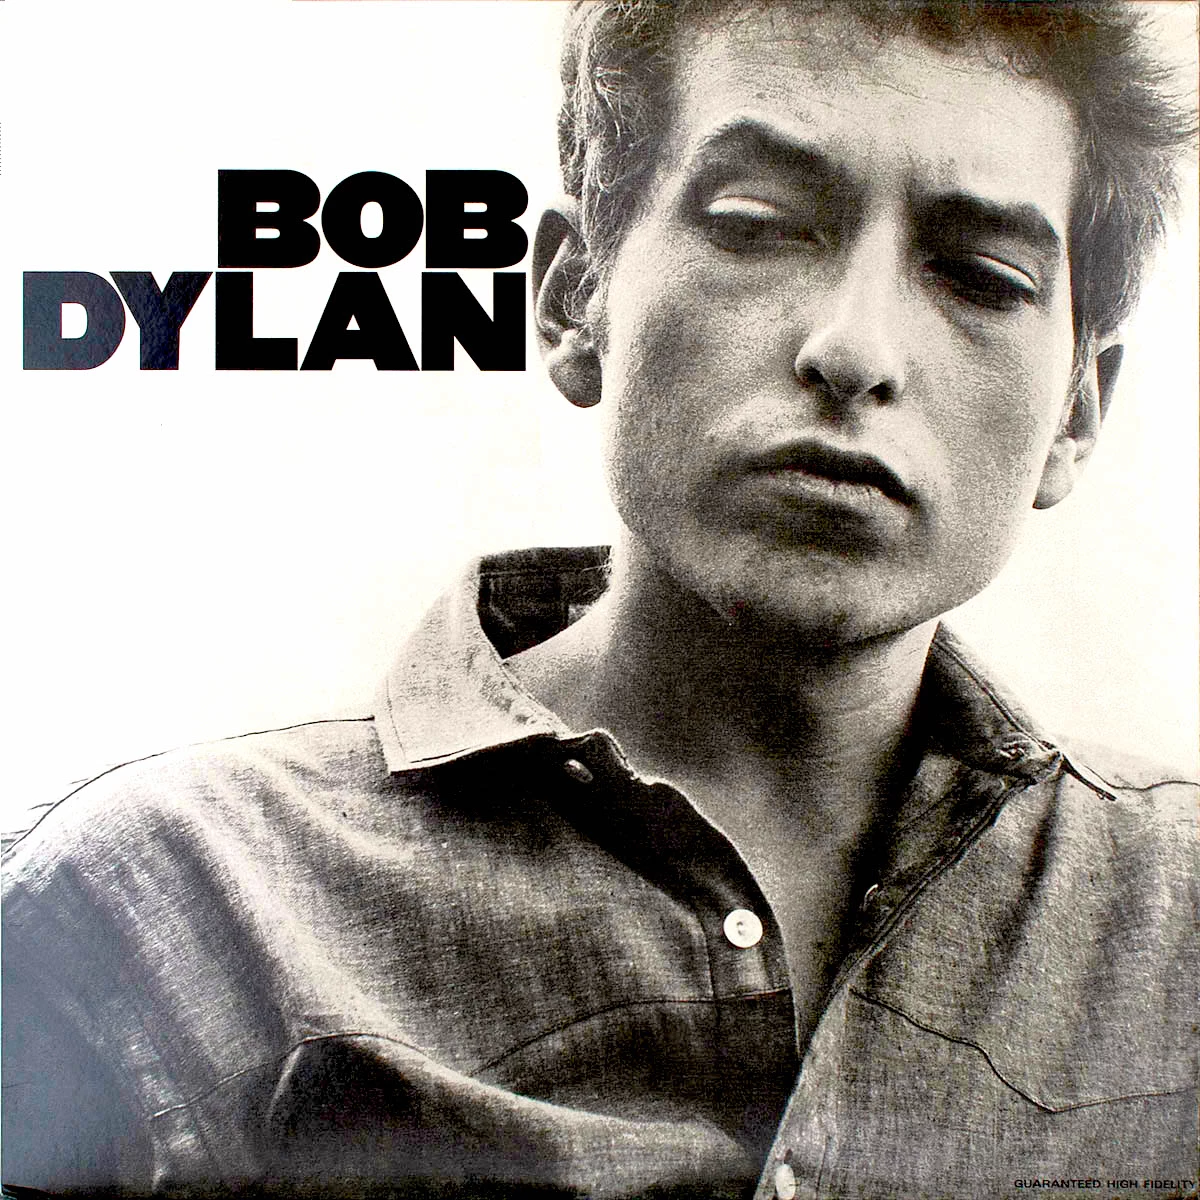 https://townsquare.media/site/295/files/2016/12/Bob-Dylan-Logo-Photo.jpg